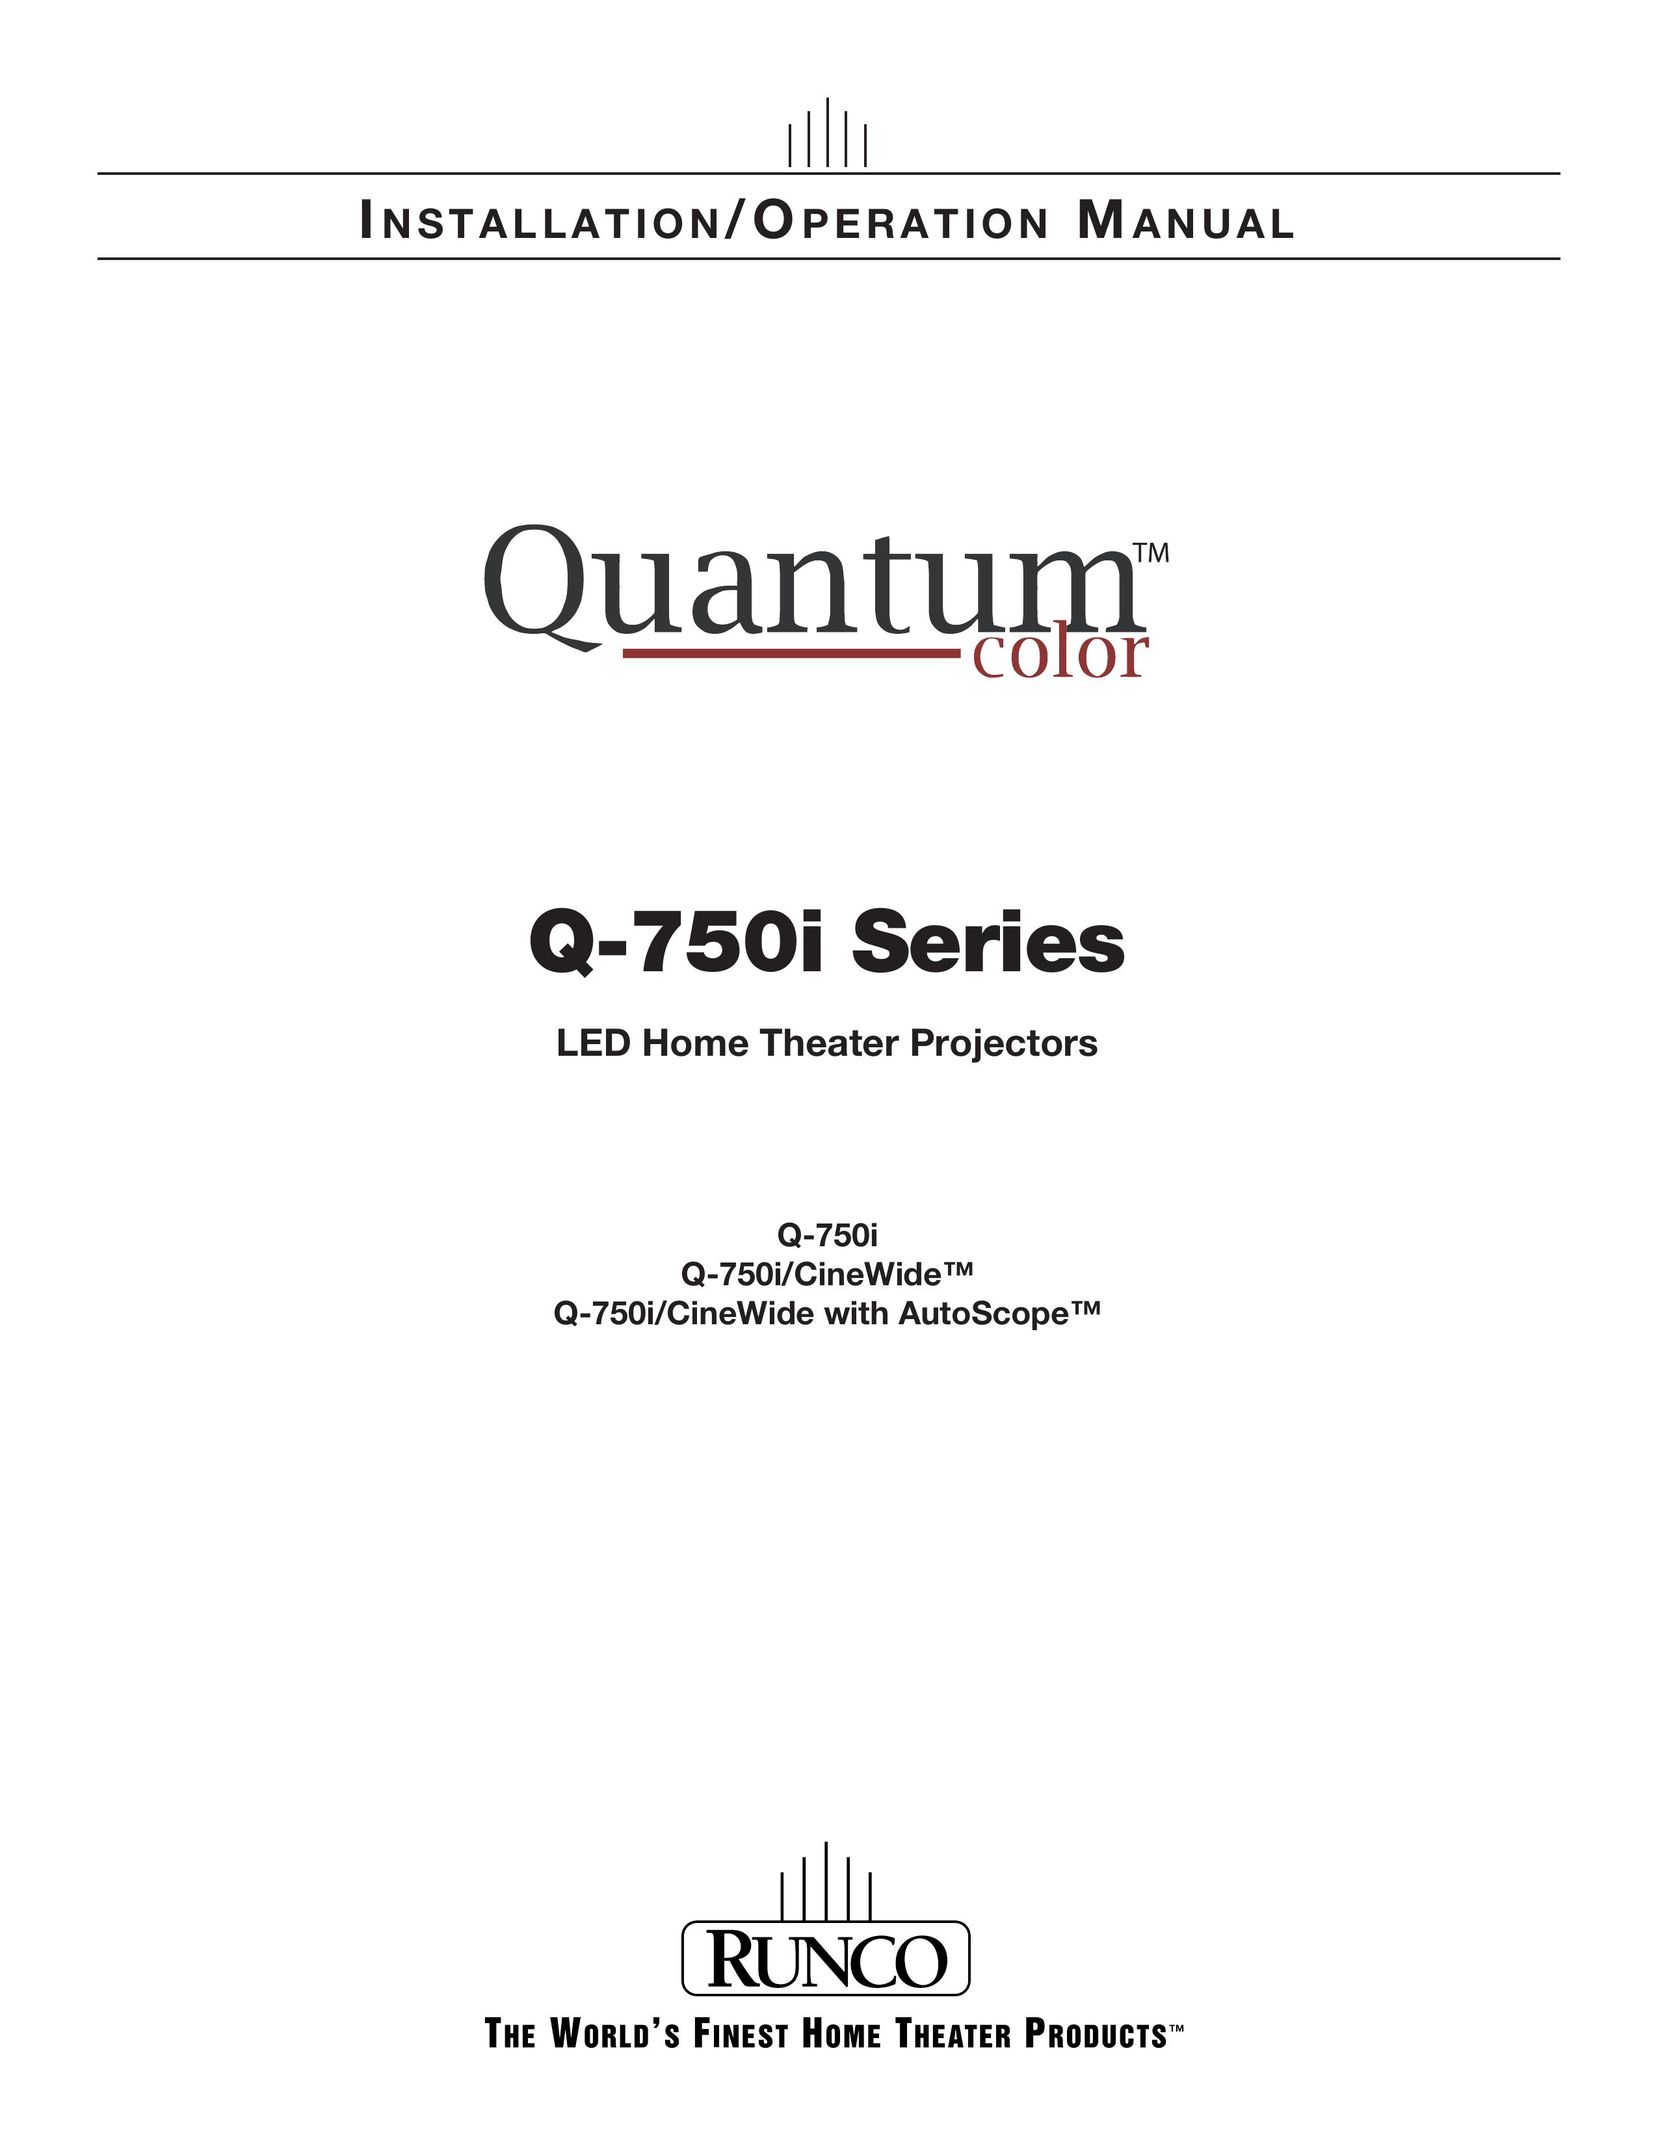 Runco Q-750I Home Theater System User Manual